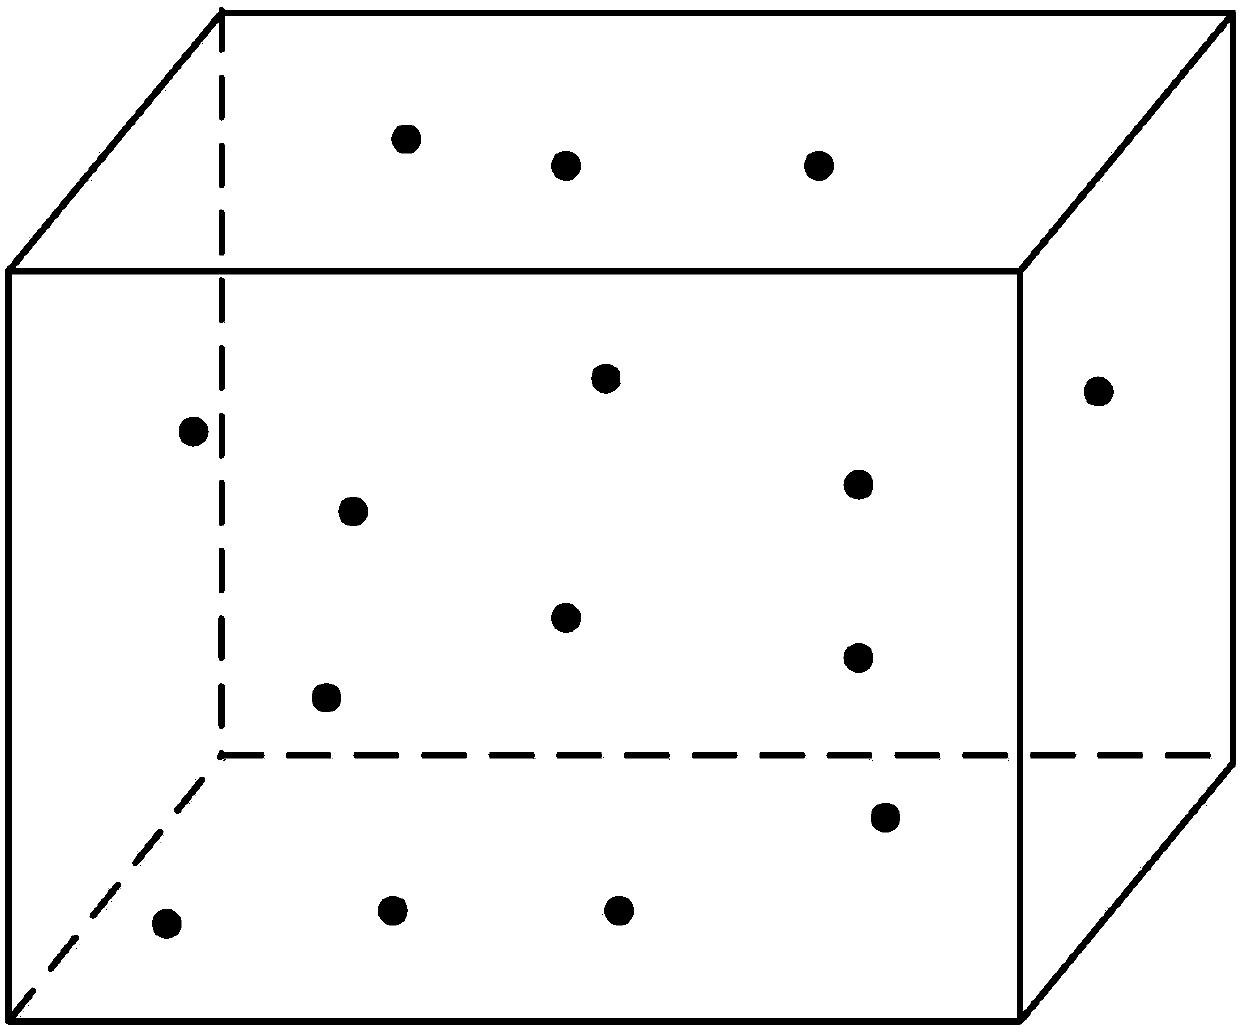 Three-dimensional directed heterogeneous mobile sensor network self-deployment method based on Voronoi diagram